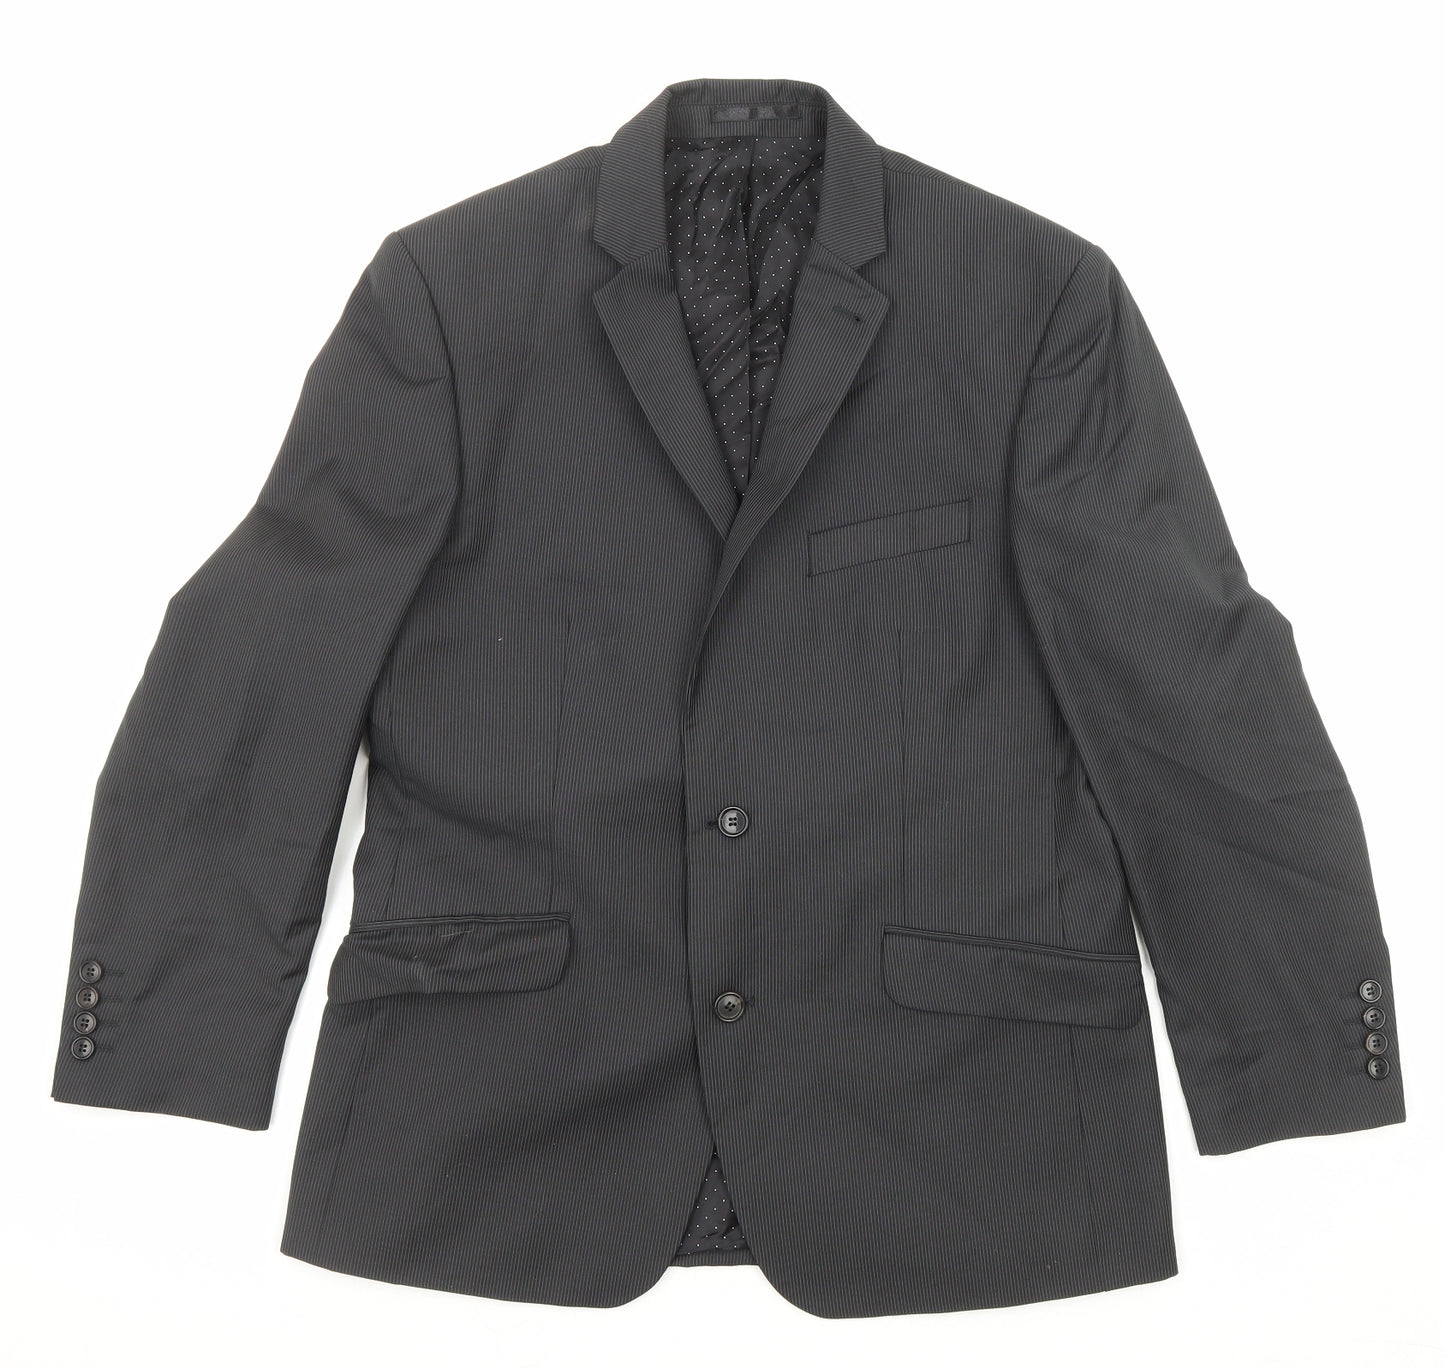 Jasper Conran Mens Black Striped Wool Jacket Suit Jacket Size 40 Regular